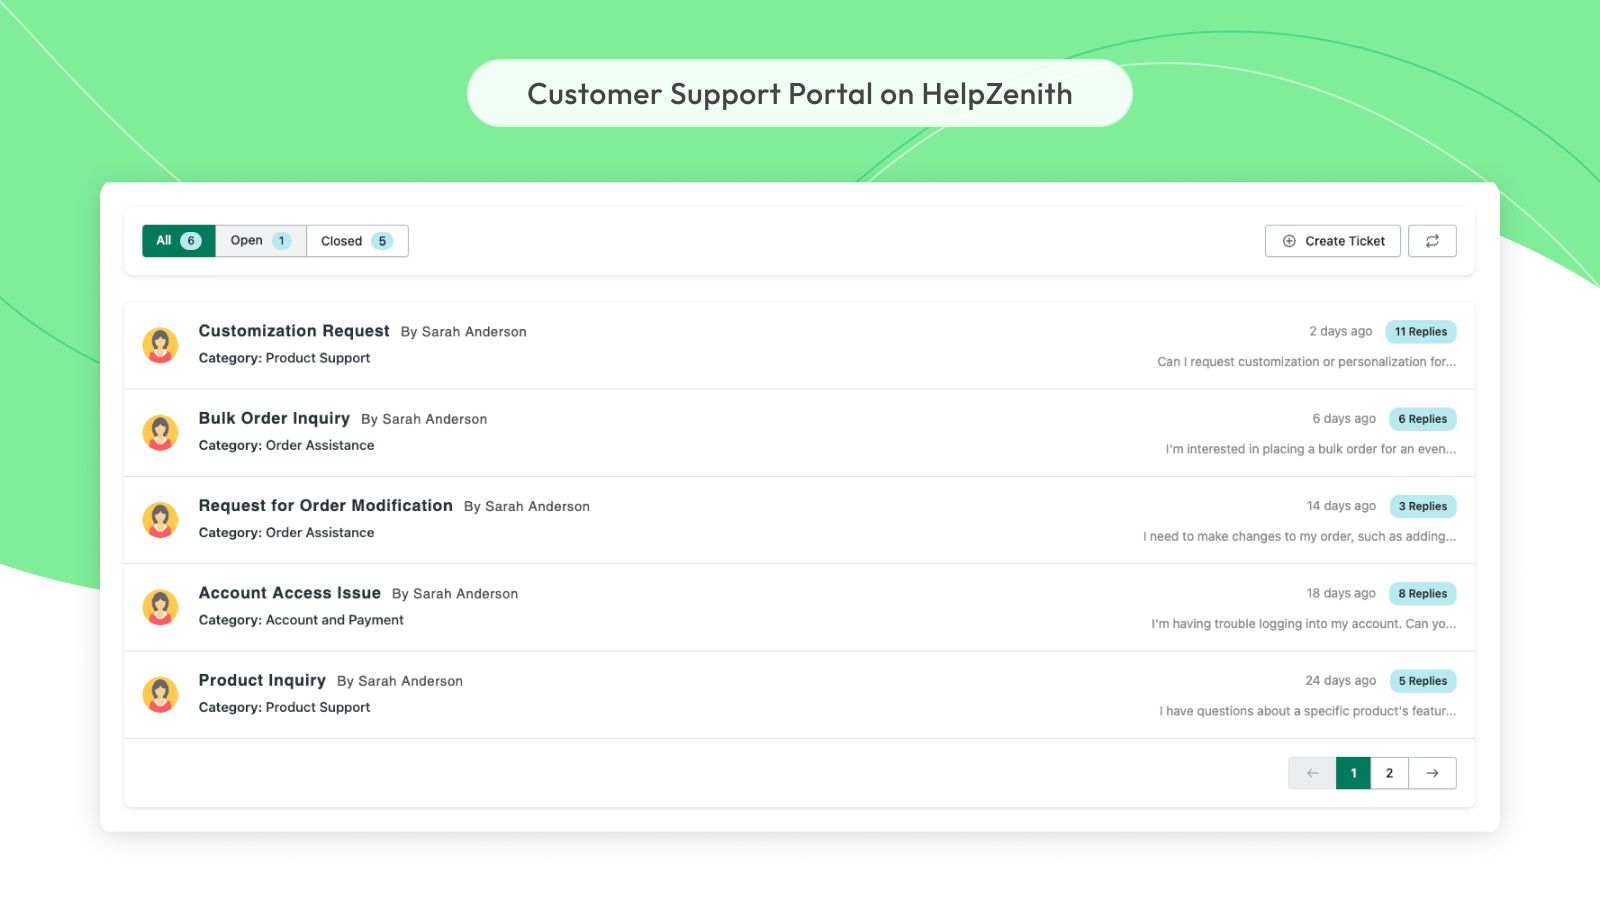 Customer Support Portal on HelpZenith